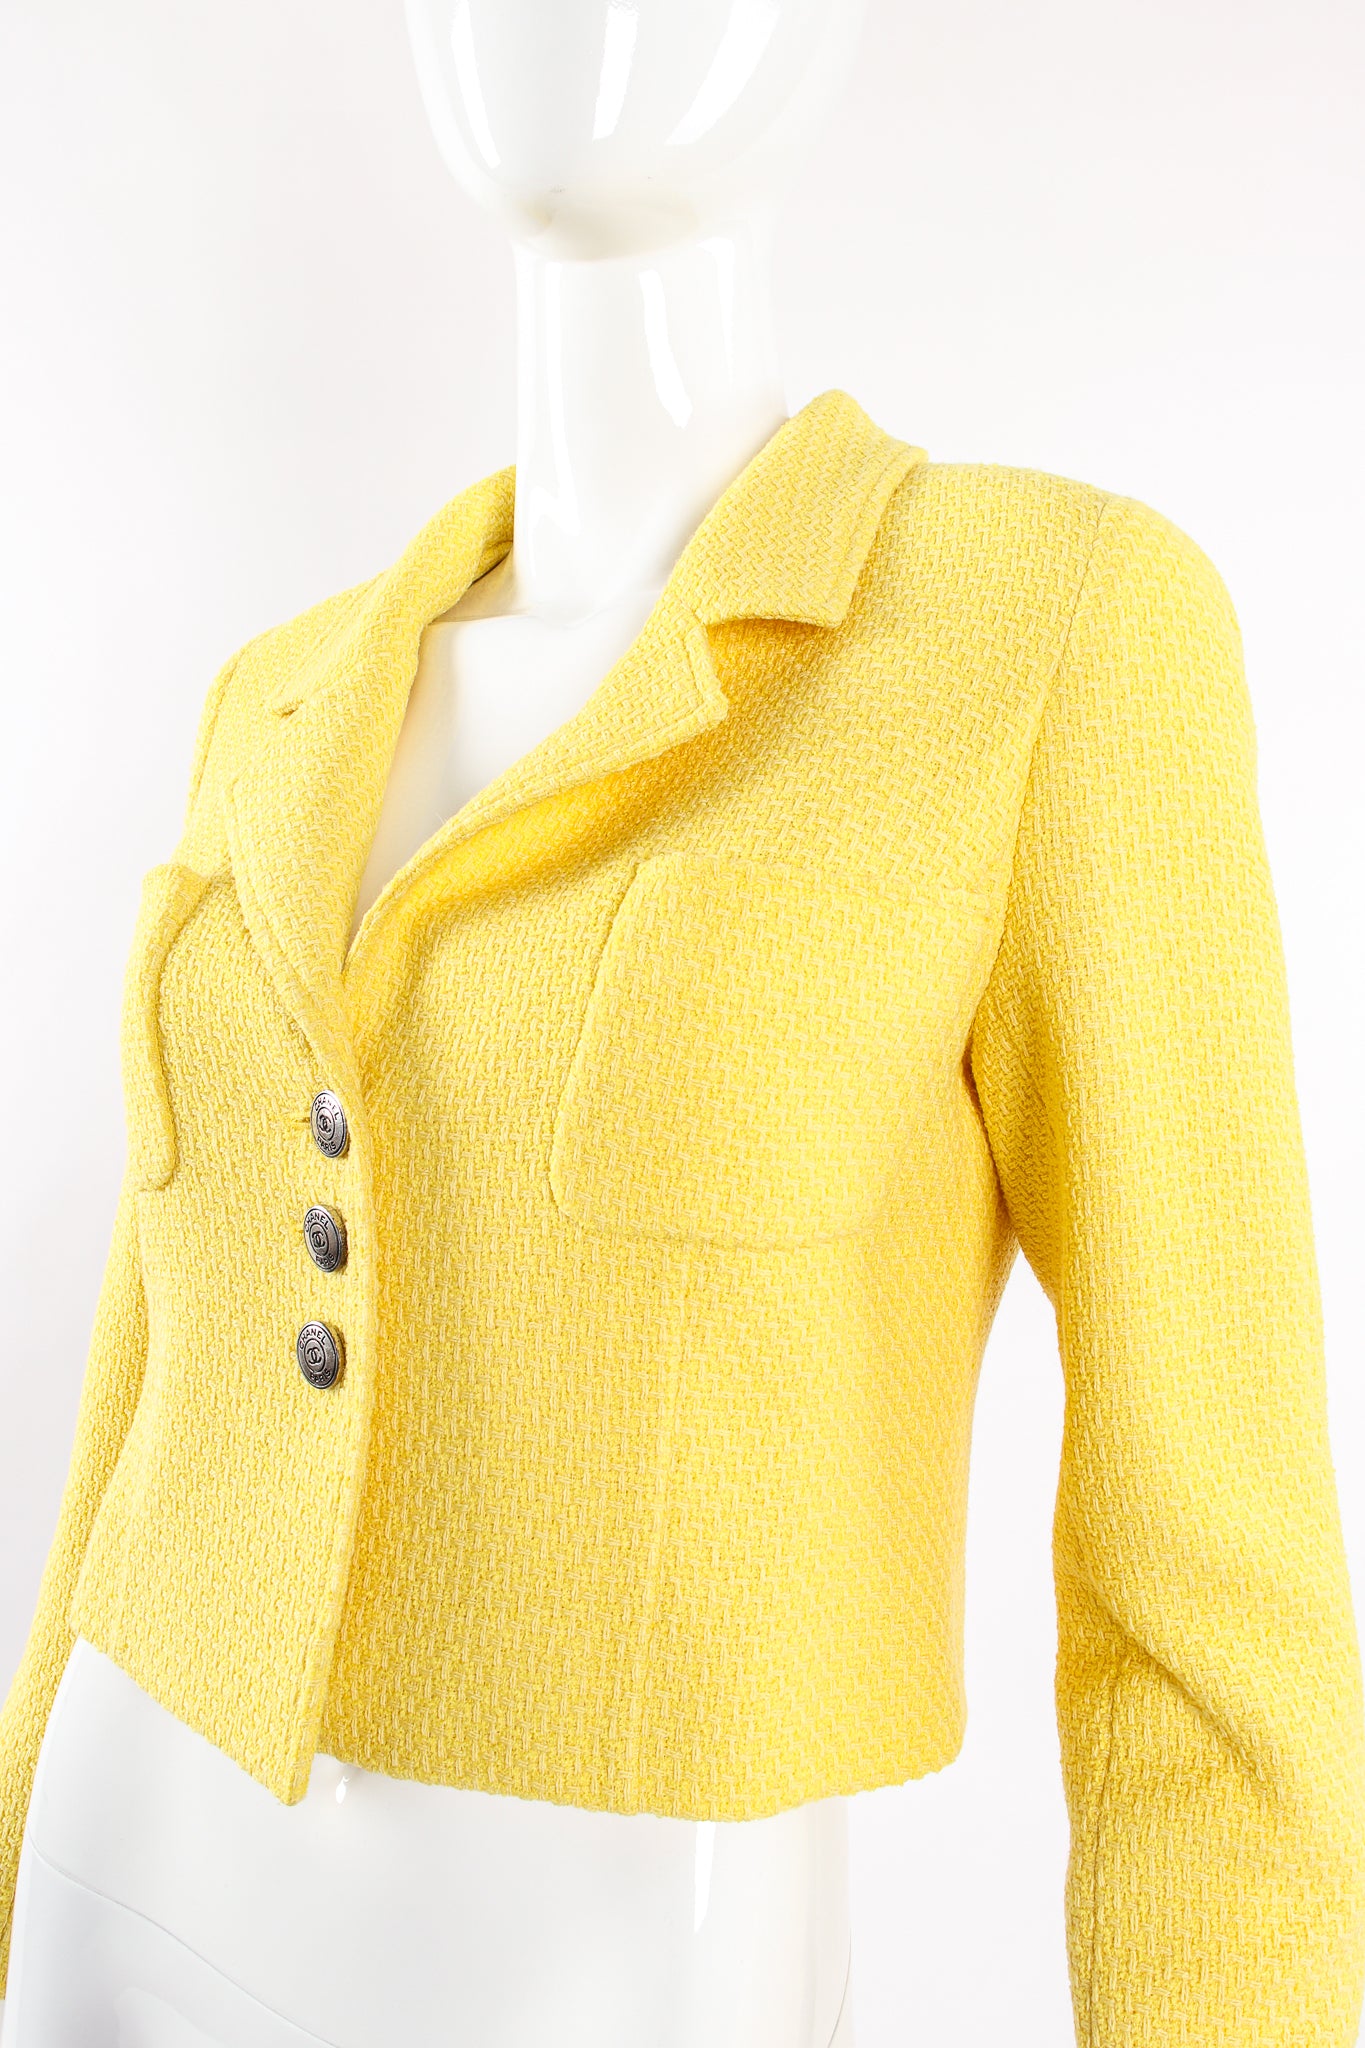 Vintage Chanel Yellow Basketweave Tweed Shrunken Jacket on Mannequin shoulder @ Recess LA